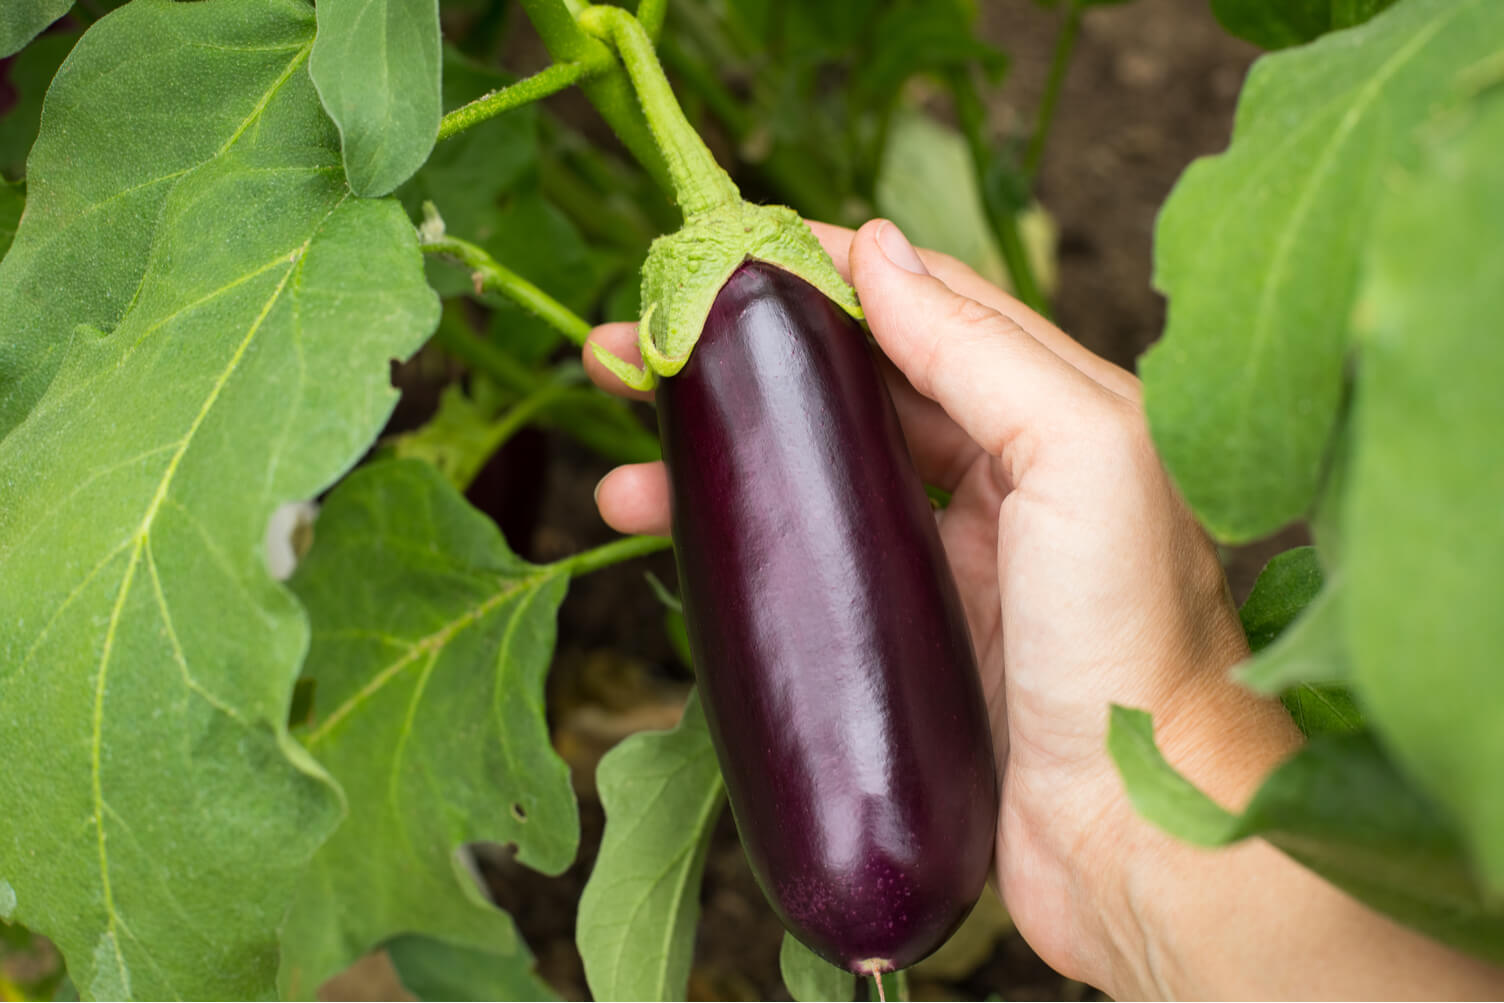 Harvesting eggplant